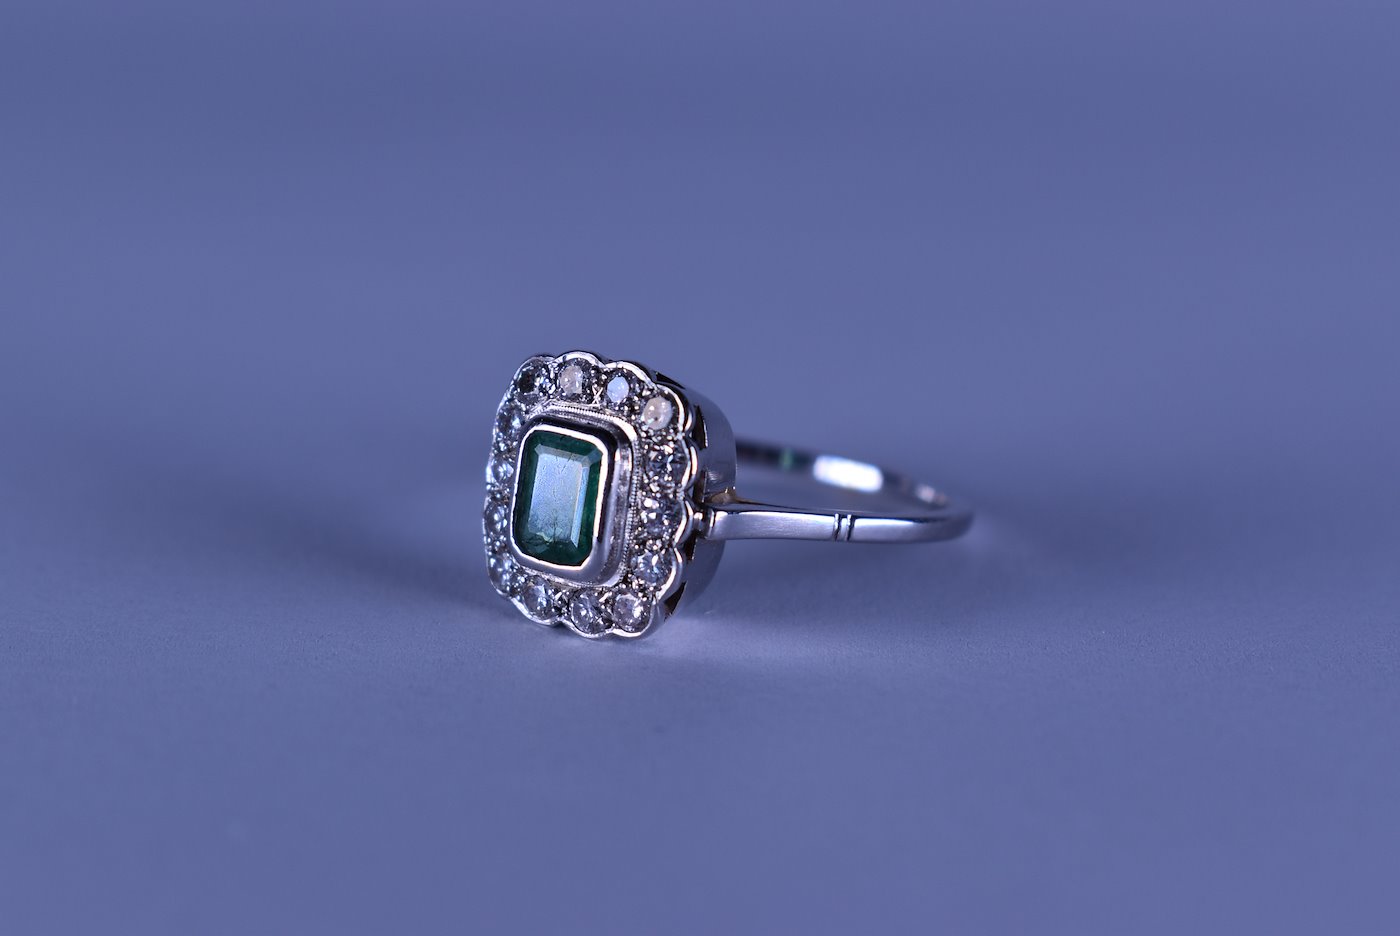 Prsten s brilianty a smaragdem - Prsten zlato 750/1000, s brilianty 0,70 ct a smaragdem 0,50 ct, hrubá hmotnost 3,75 g